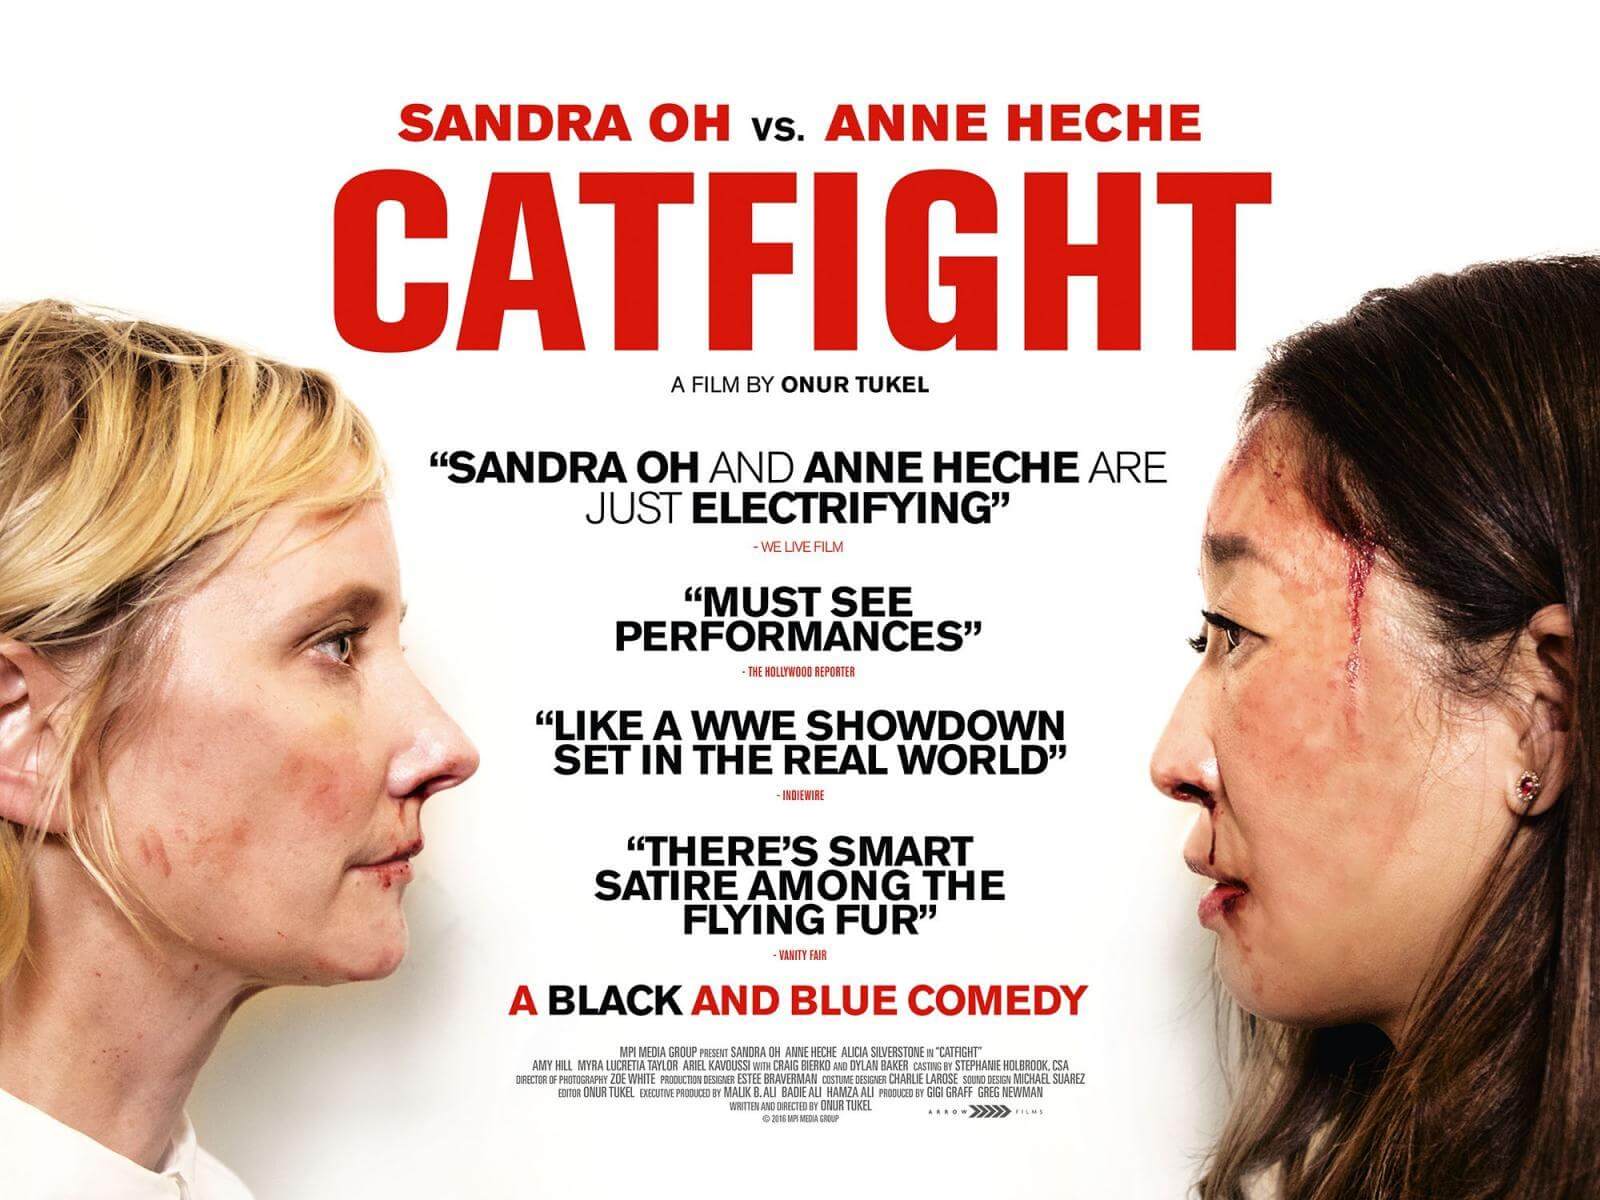 catfight_movie-2016-sandra-oh-anne-heche